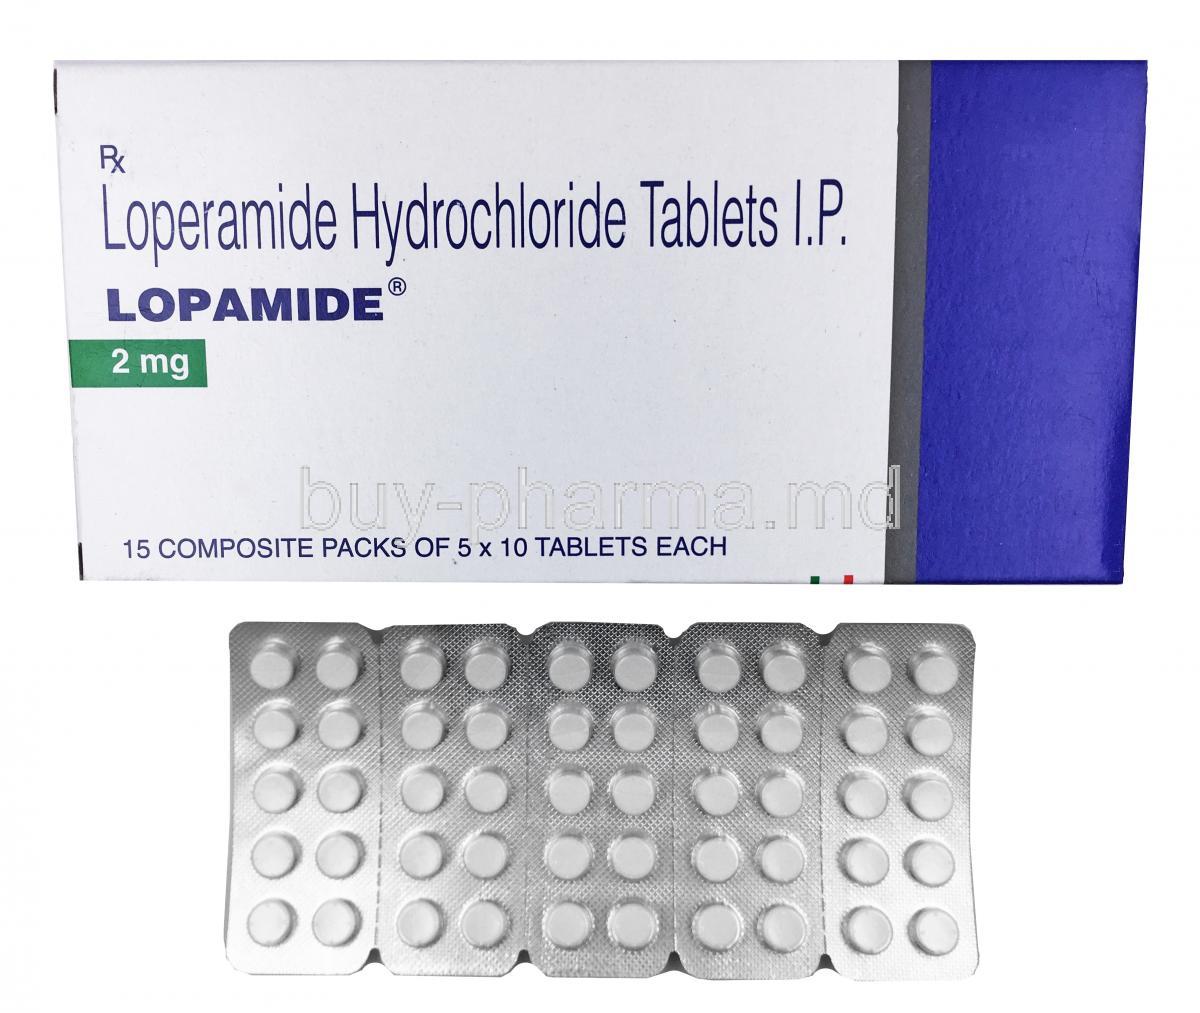 Lopamide, Loperamide 2mg box and tablet